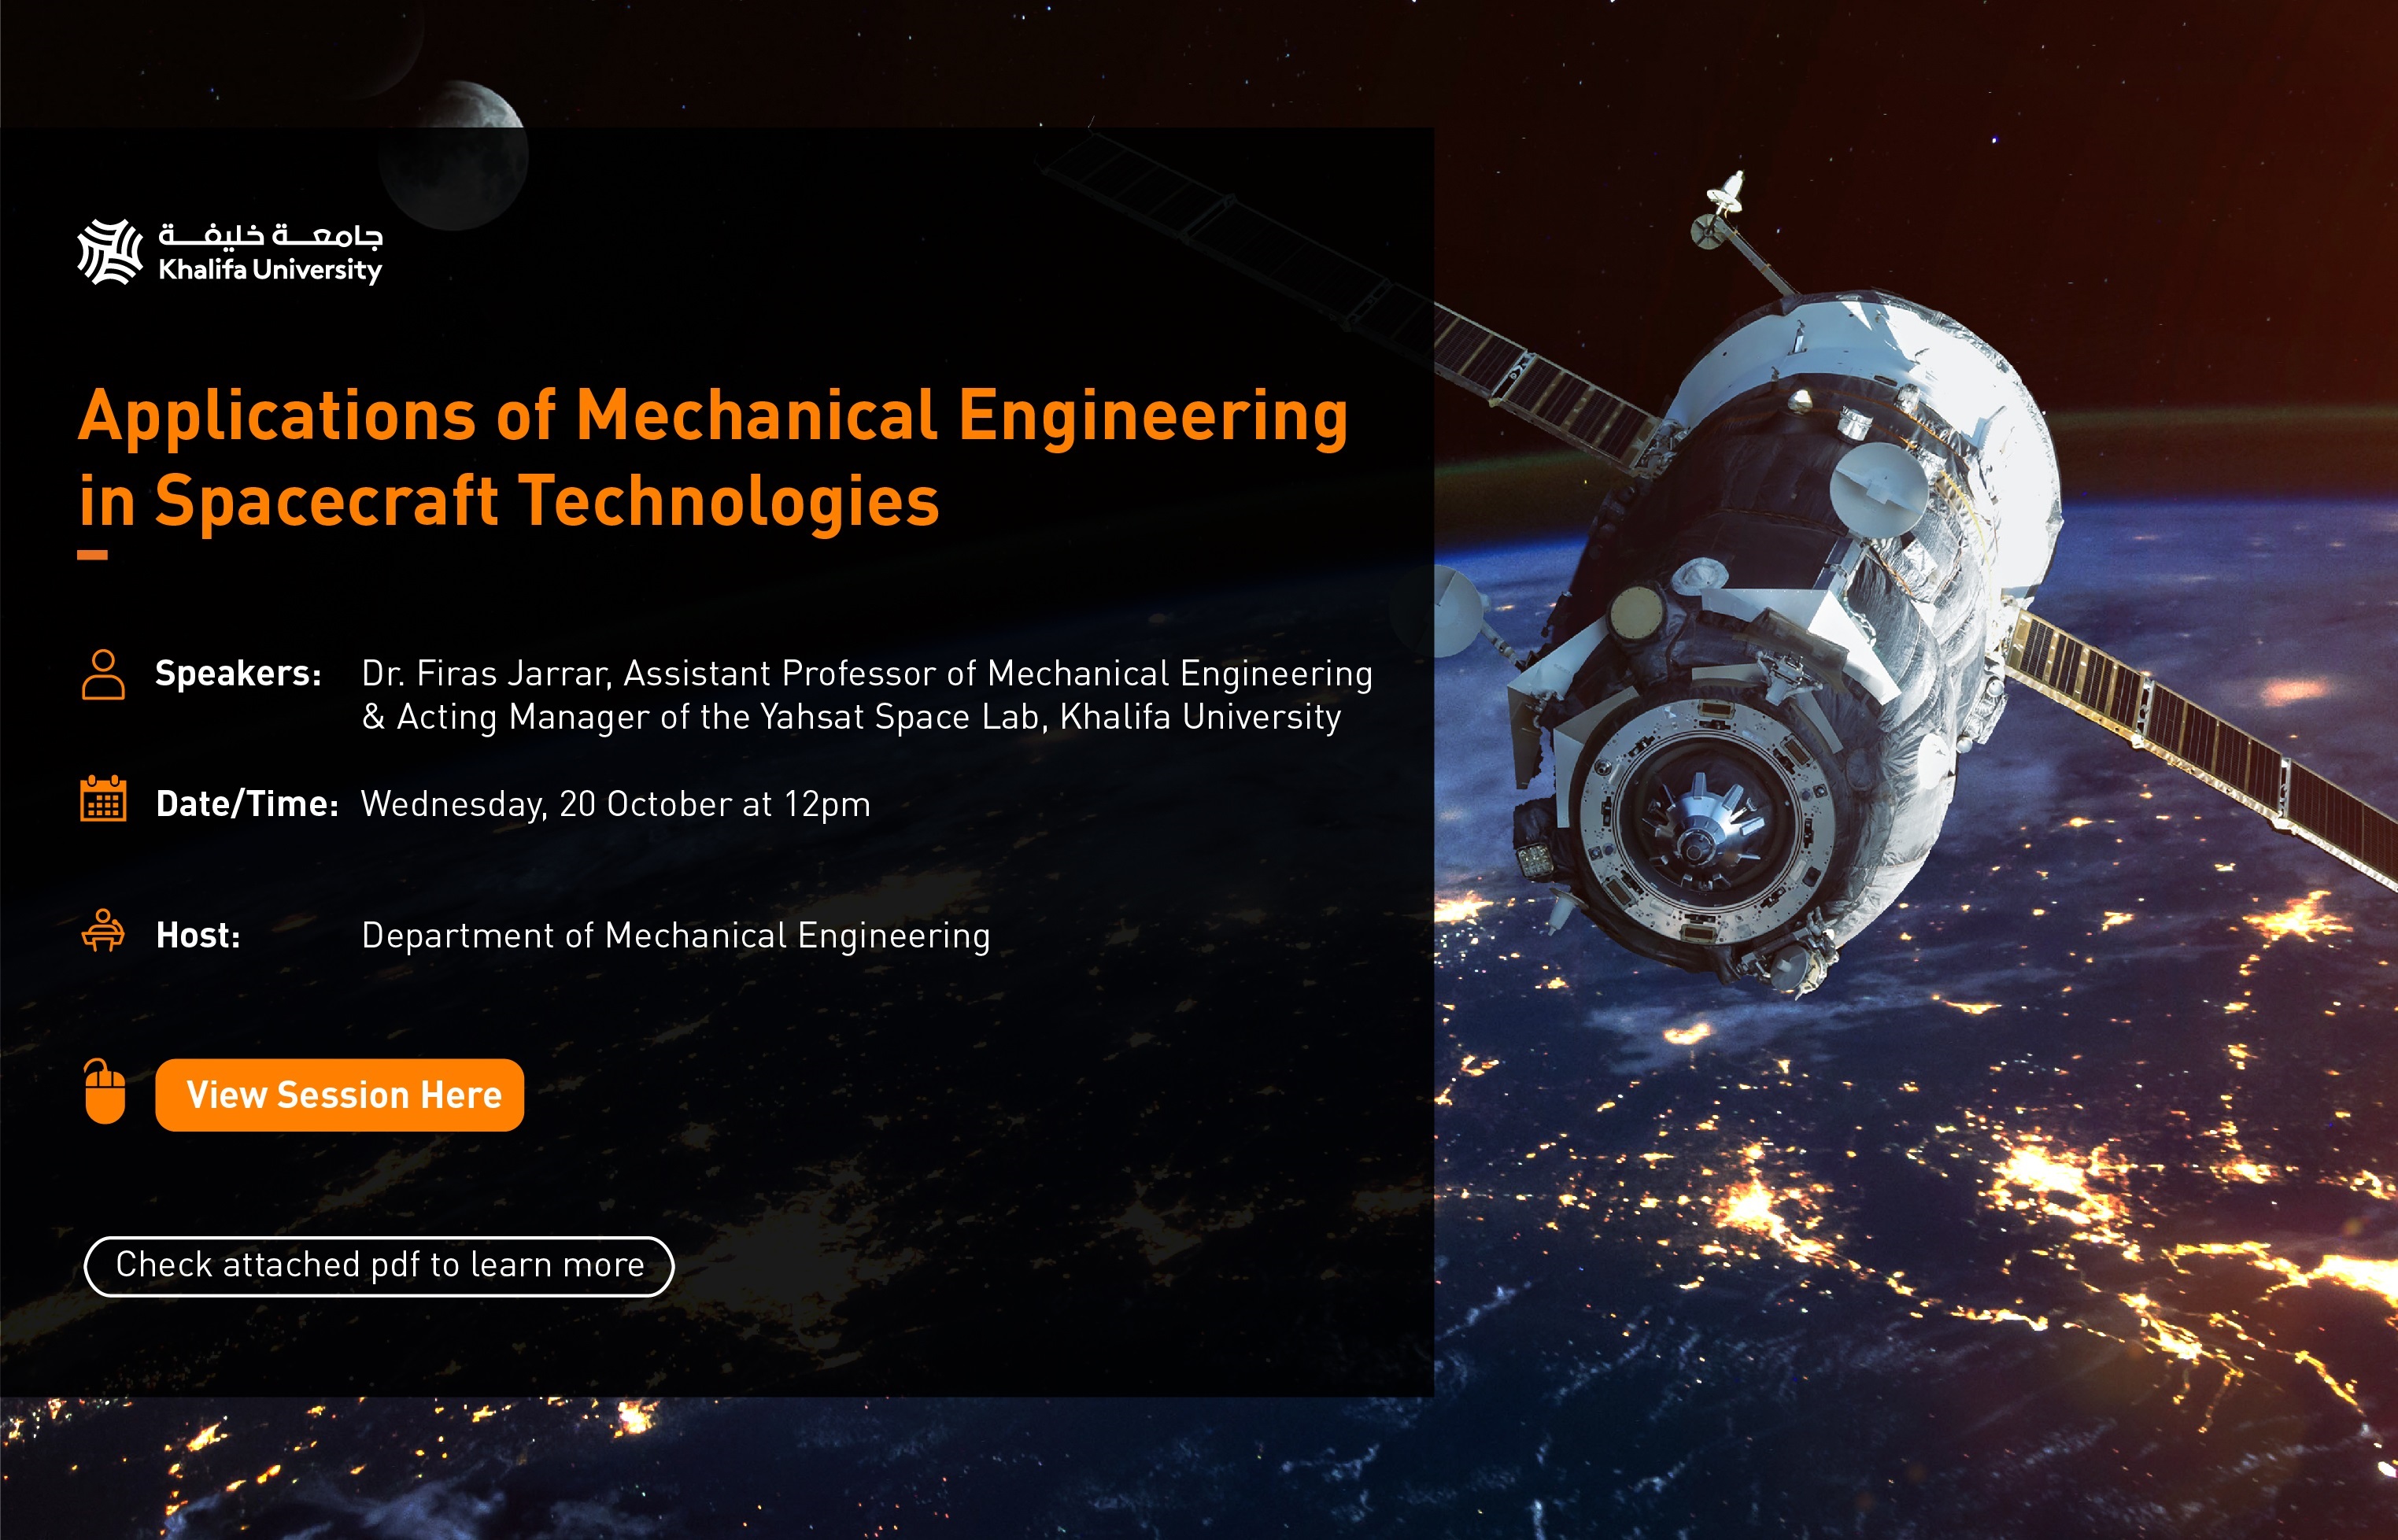 MEEN Webinar: “Applications of Mechanical Engineering in Spacecraft Technologies” by Dr. Firas Jarrar